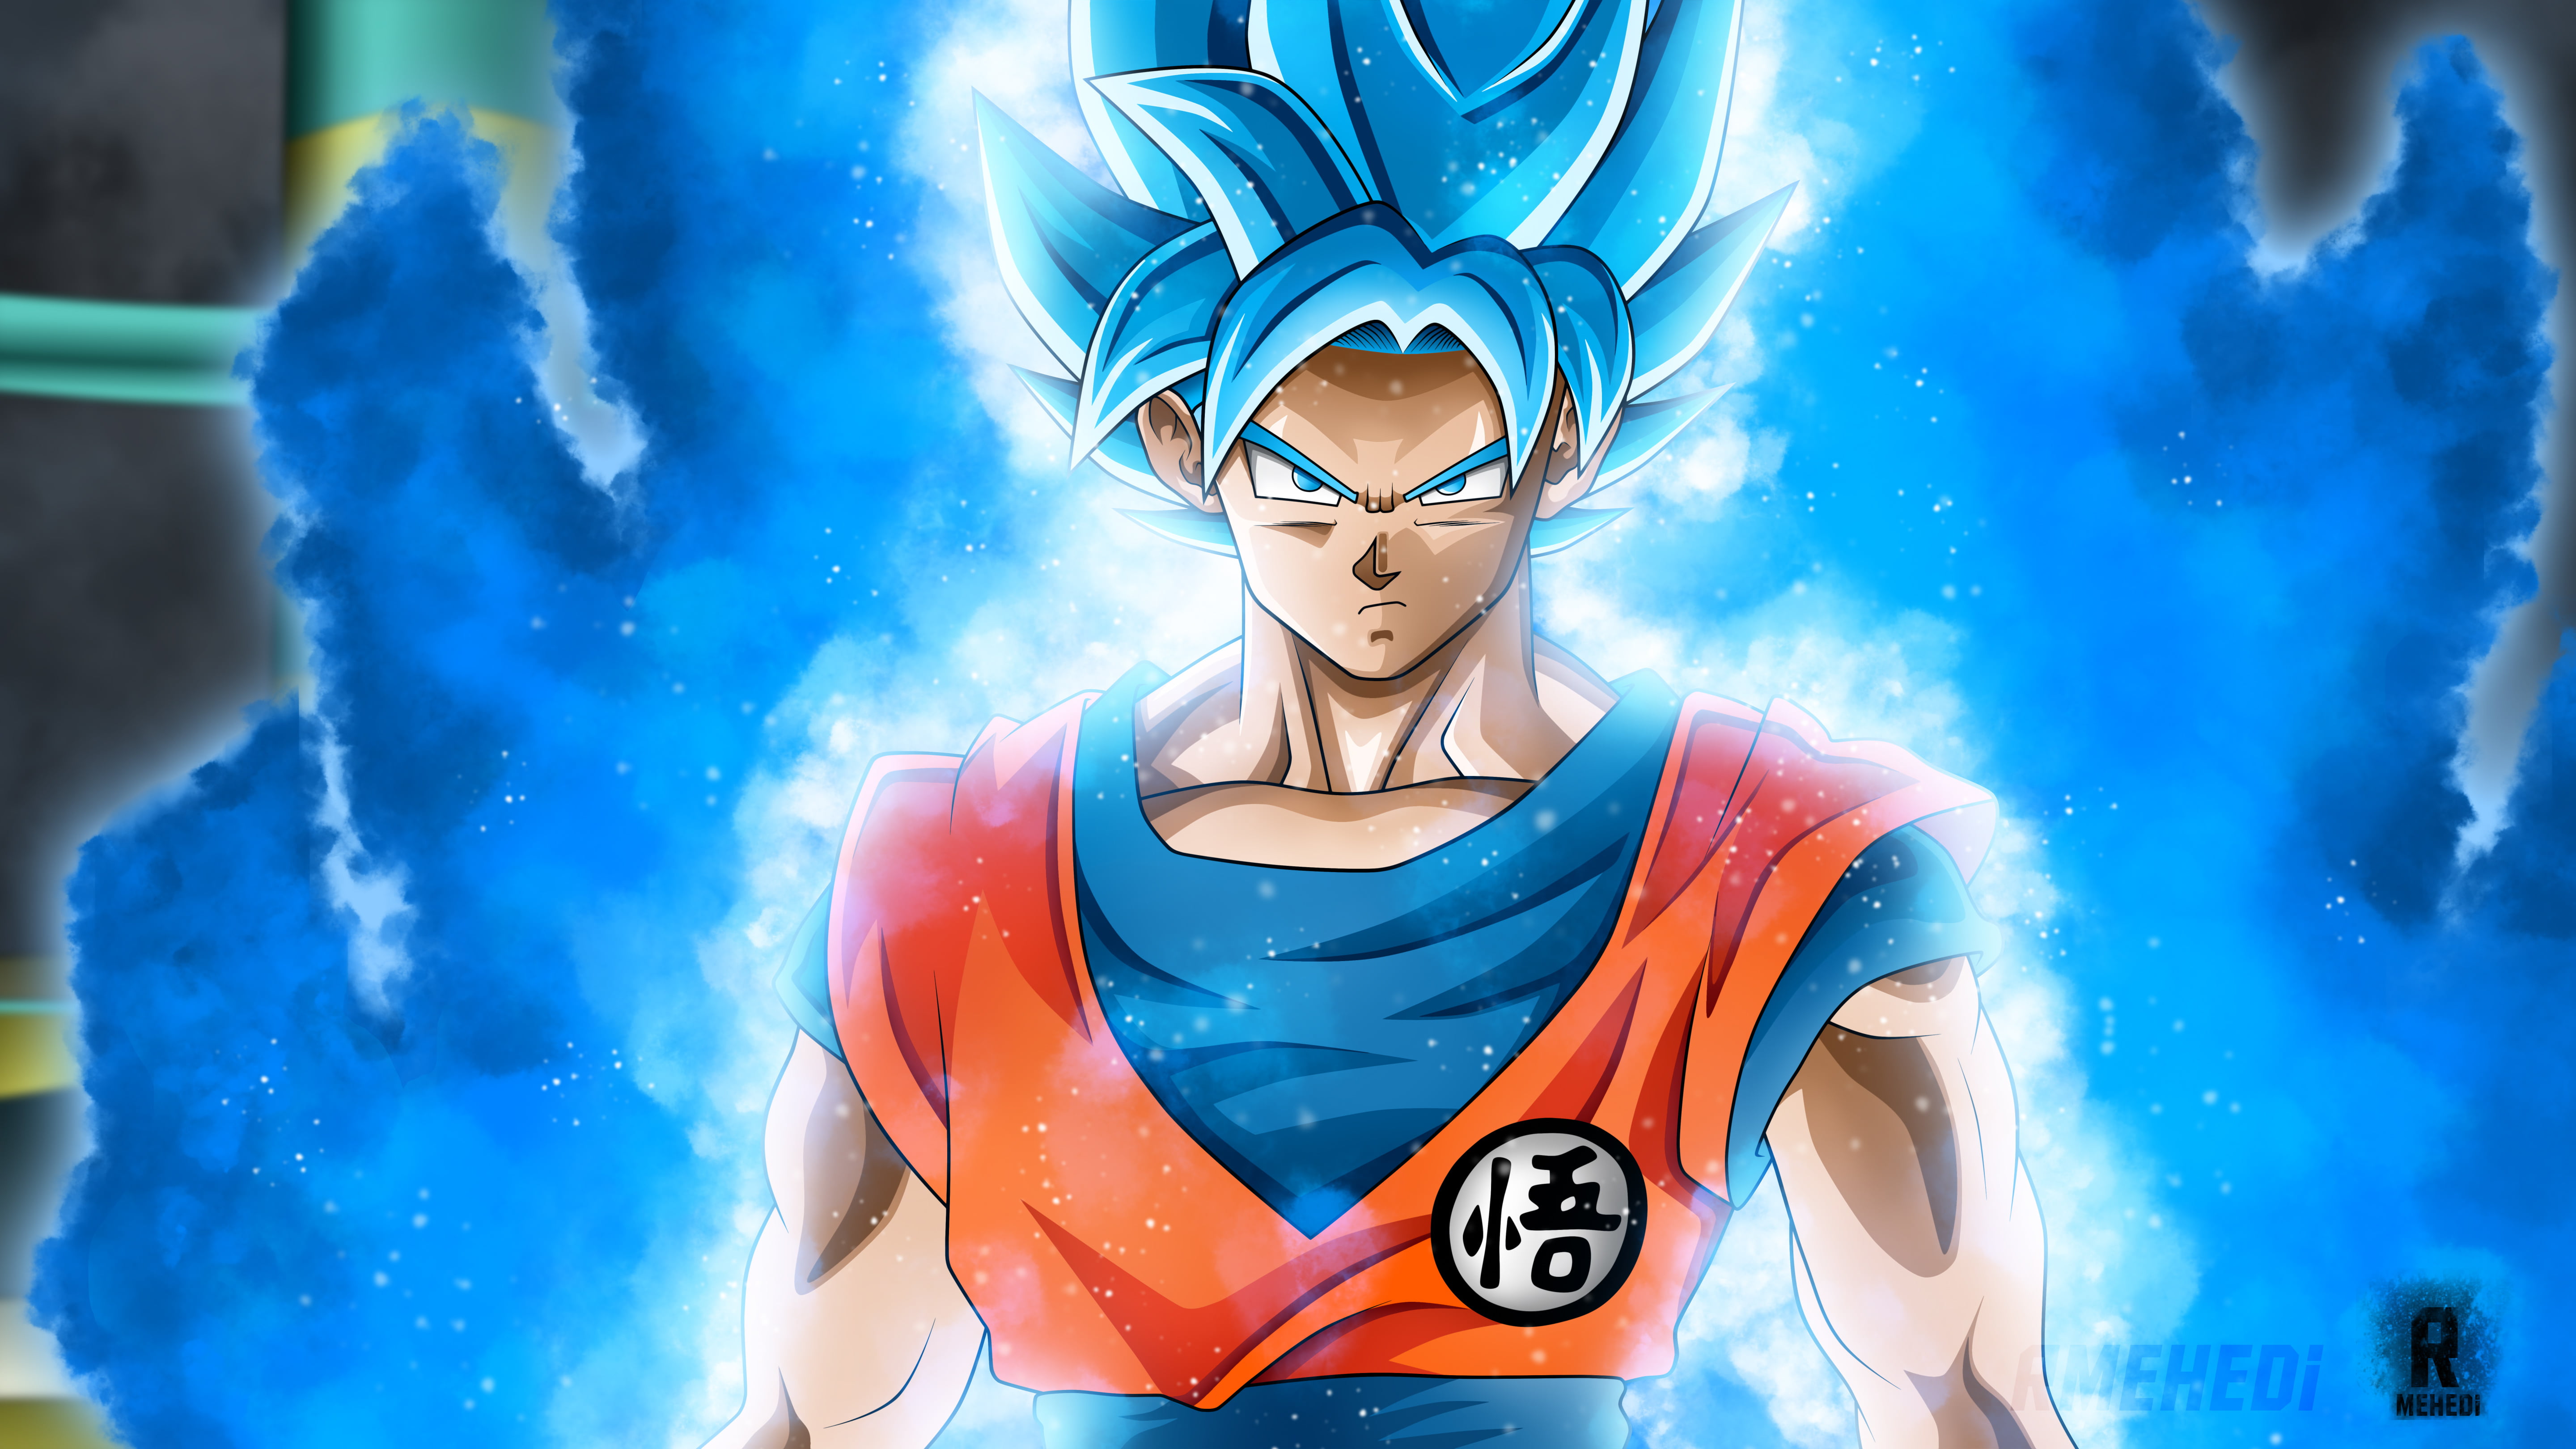 Goku Super Saiyan Wallpaper 72 images